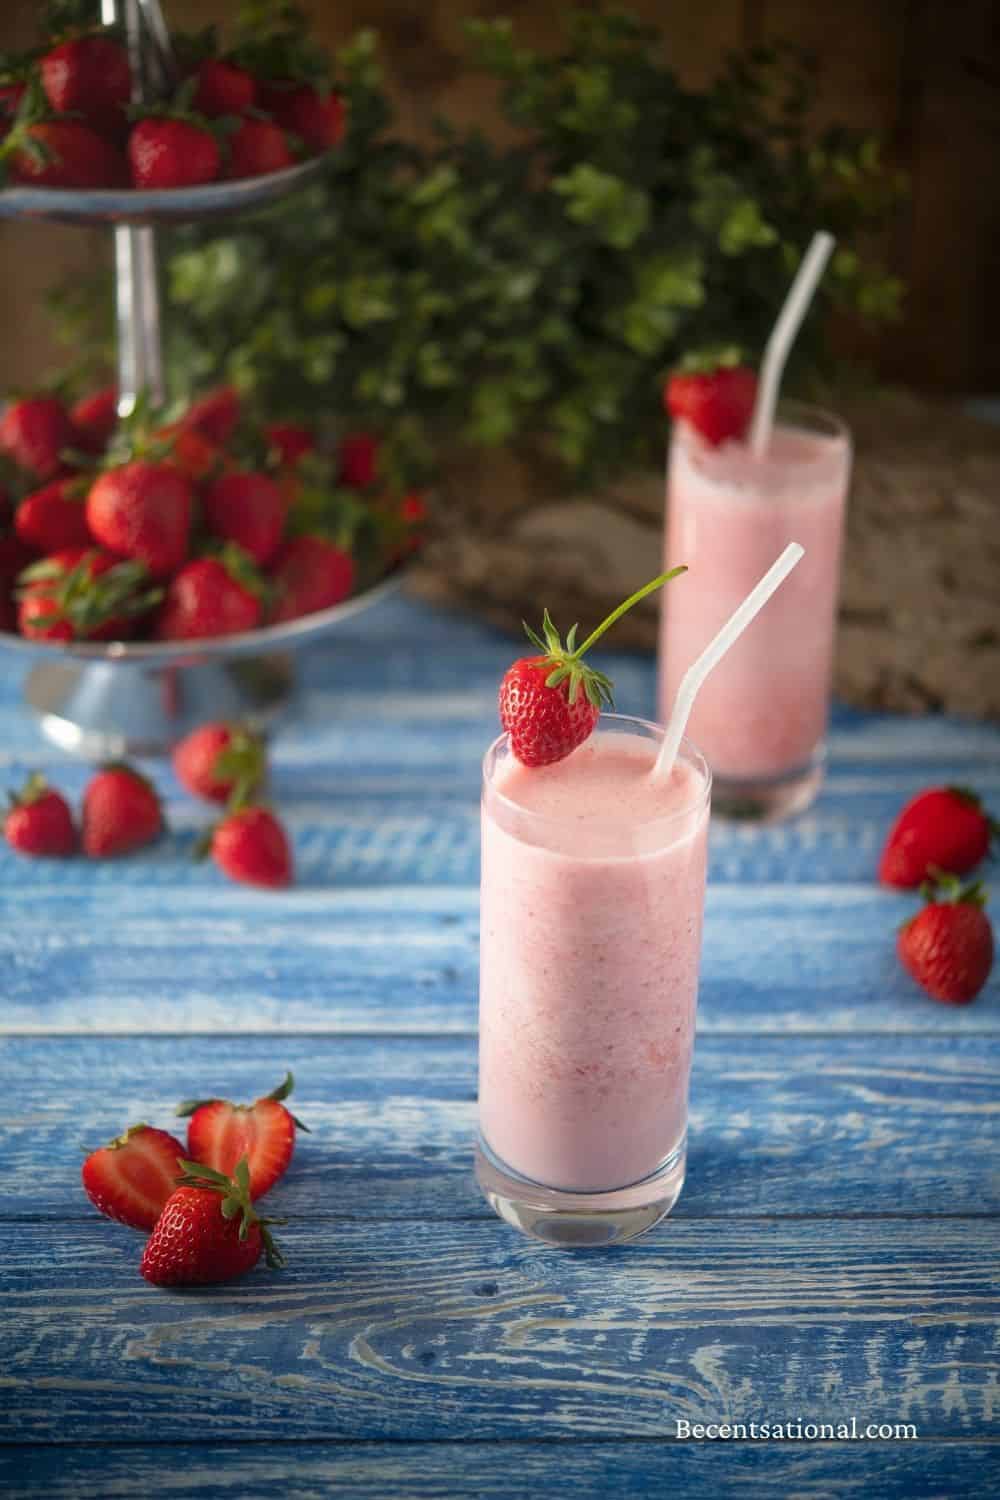 Keto Strawberry Smoothie - Be Centsational